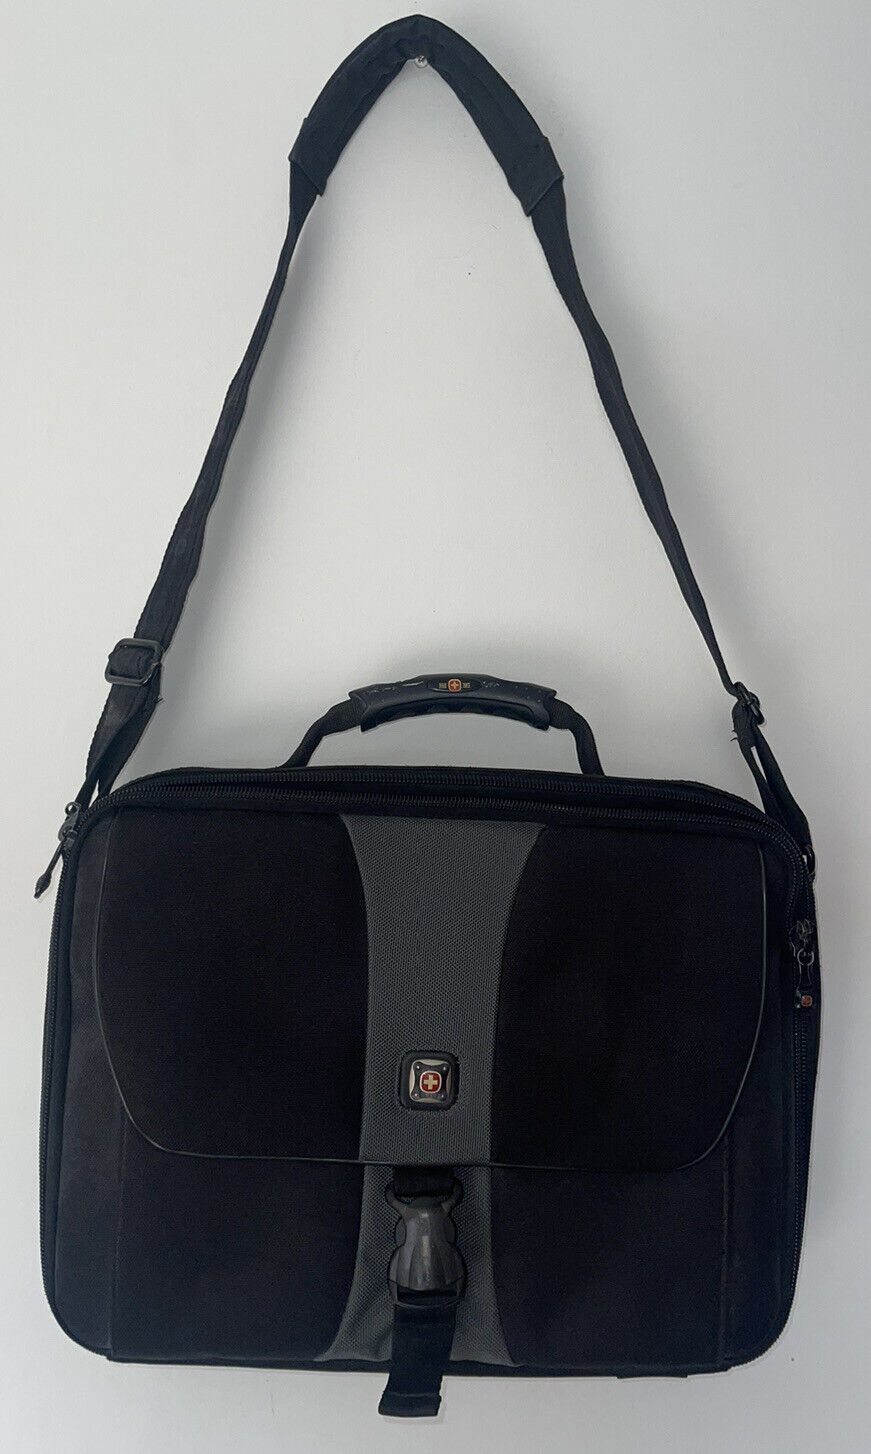 SWISSGEAR by WENGER Laptop Briefcase Bag 16”